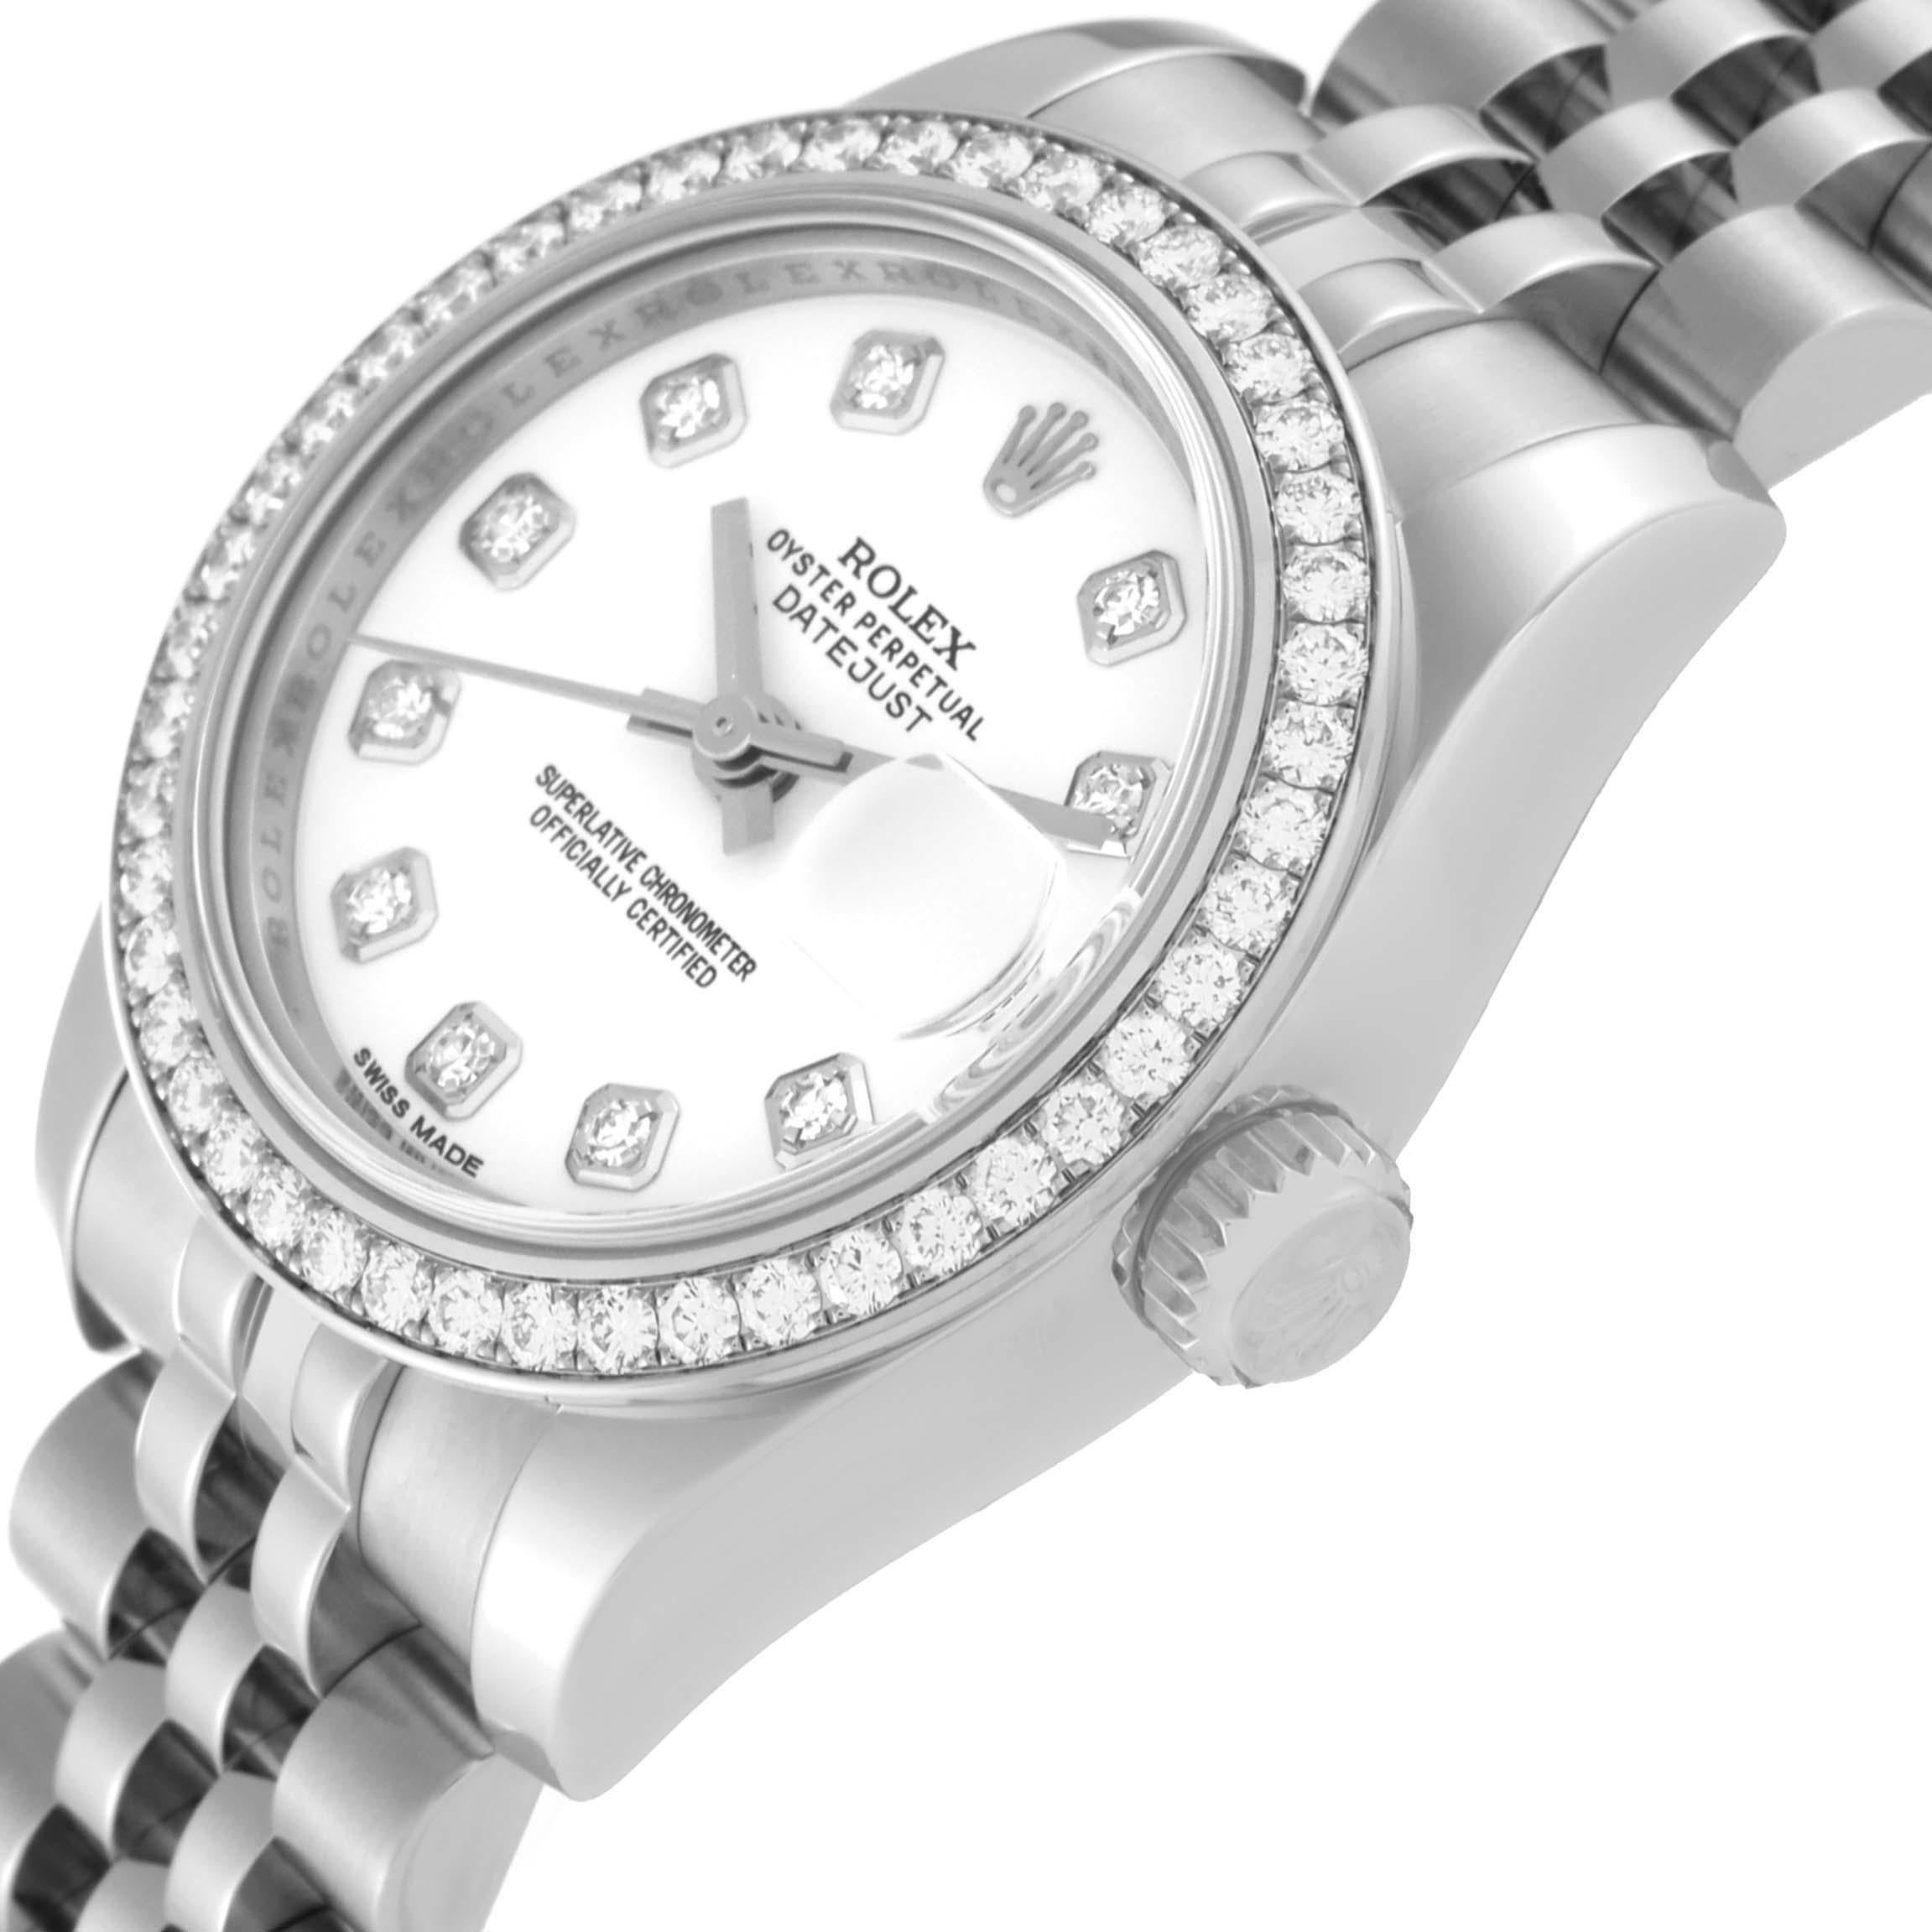 Women's Rolex Datejust 26 Steel White Gold Diamond Ladies Watch 179384 Box Card For Sale